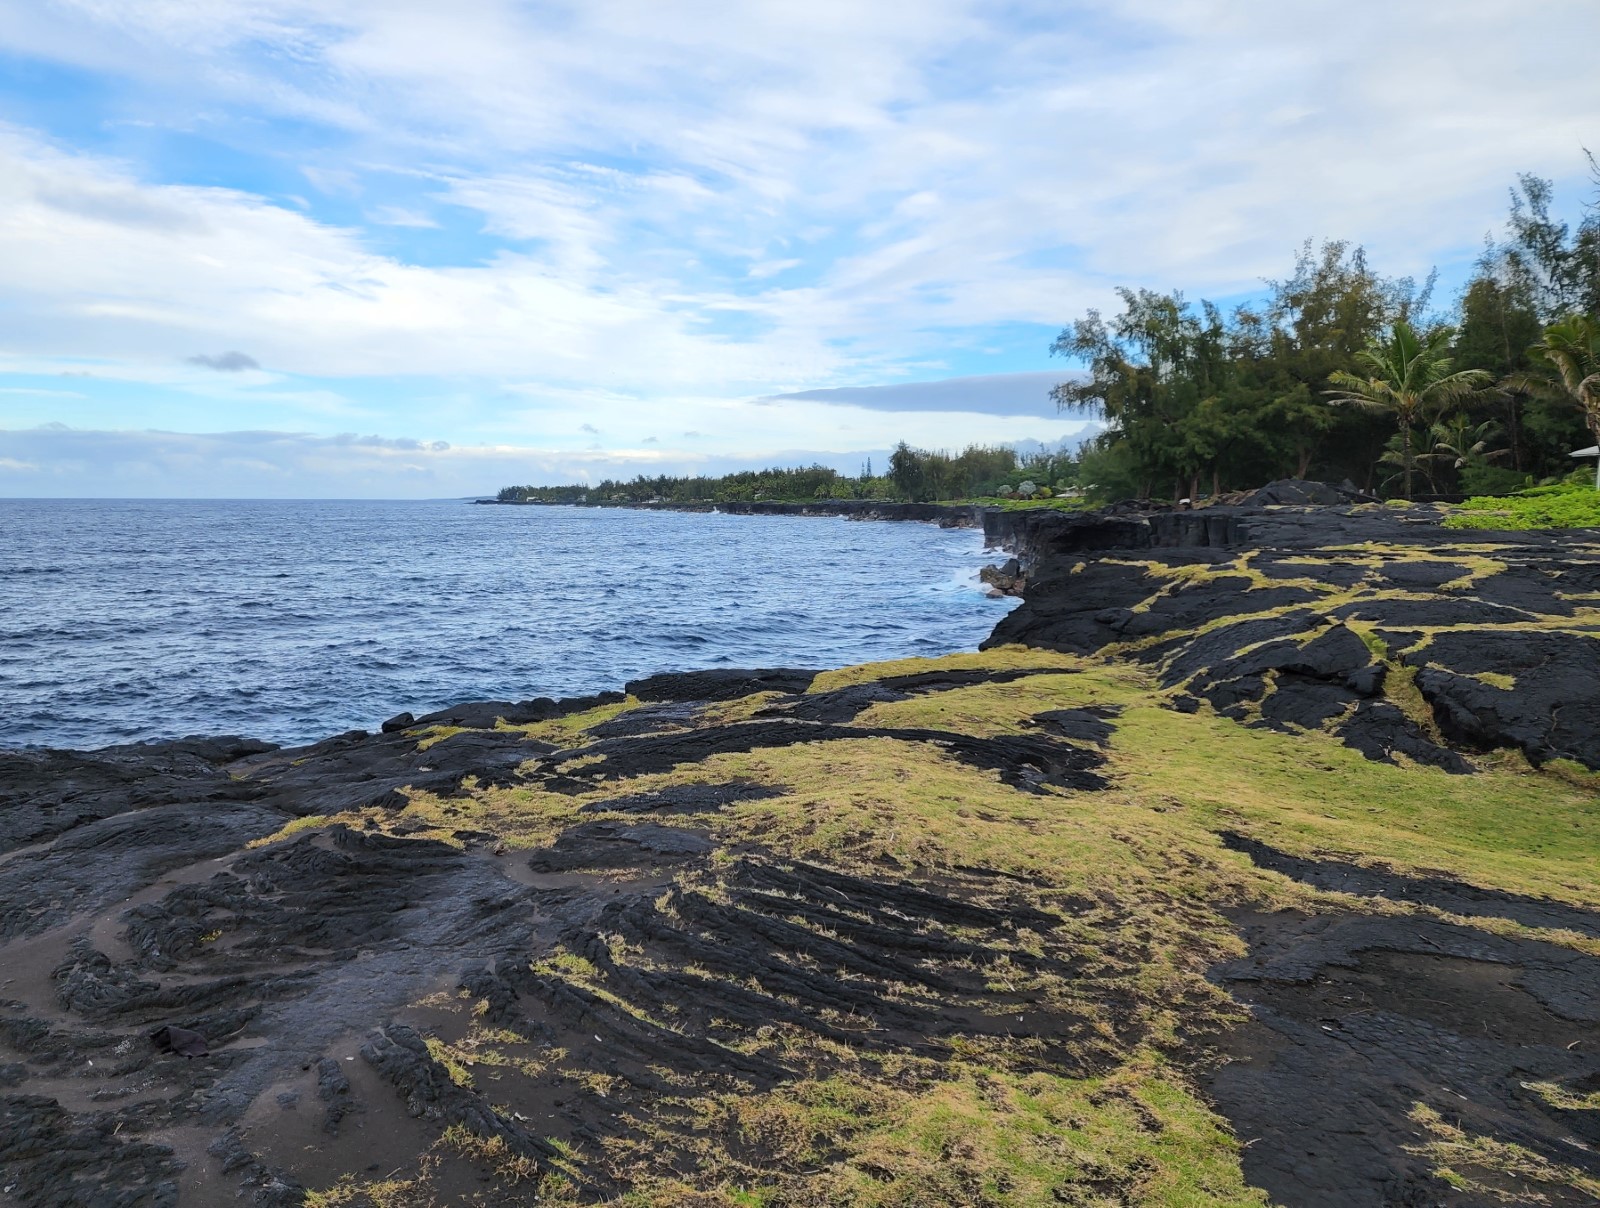 Hawaiian Paradise Park Shoreline Access